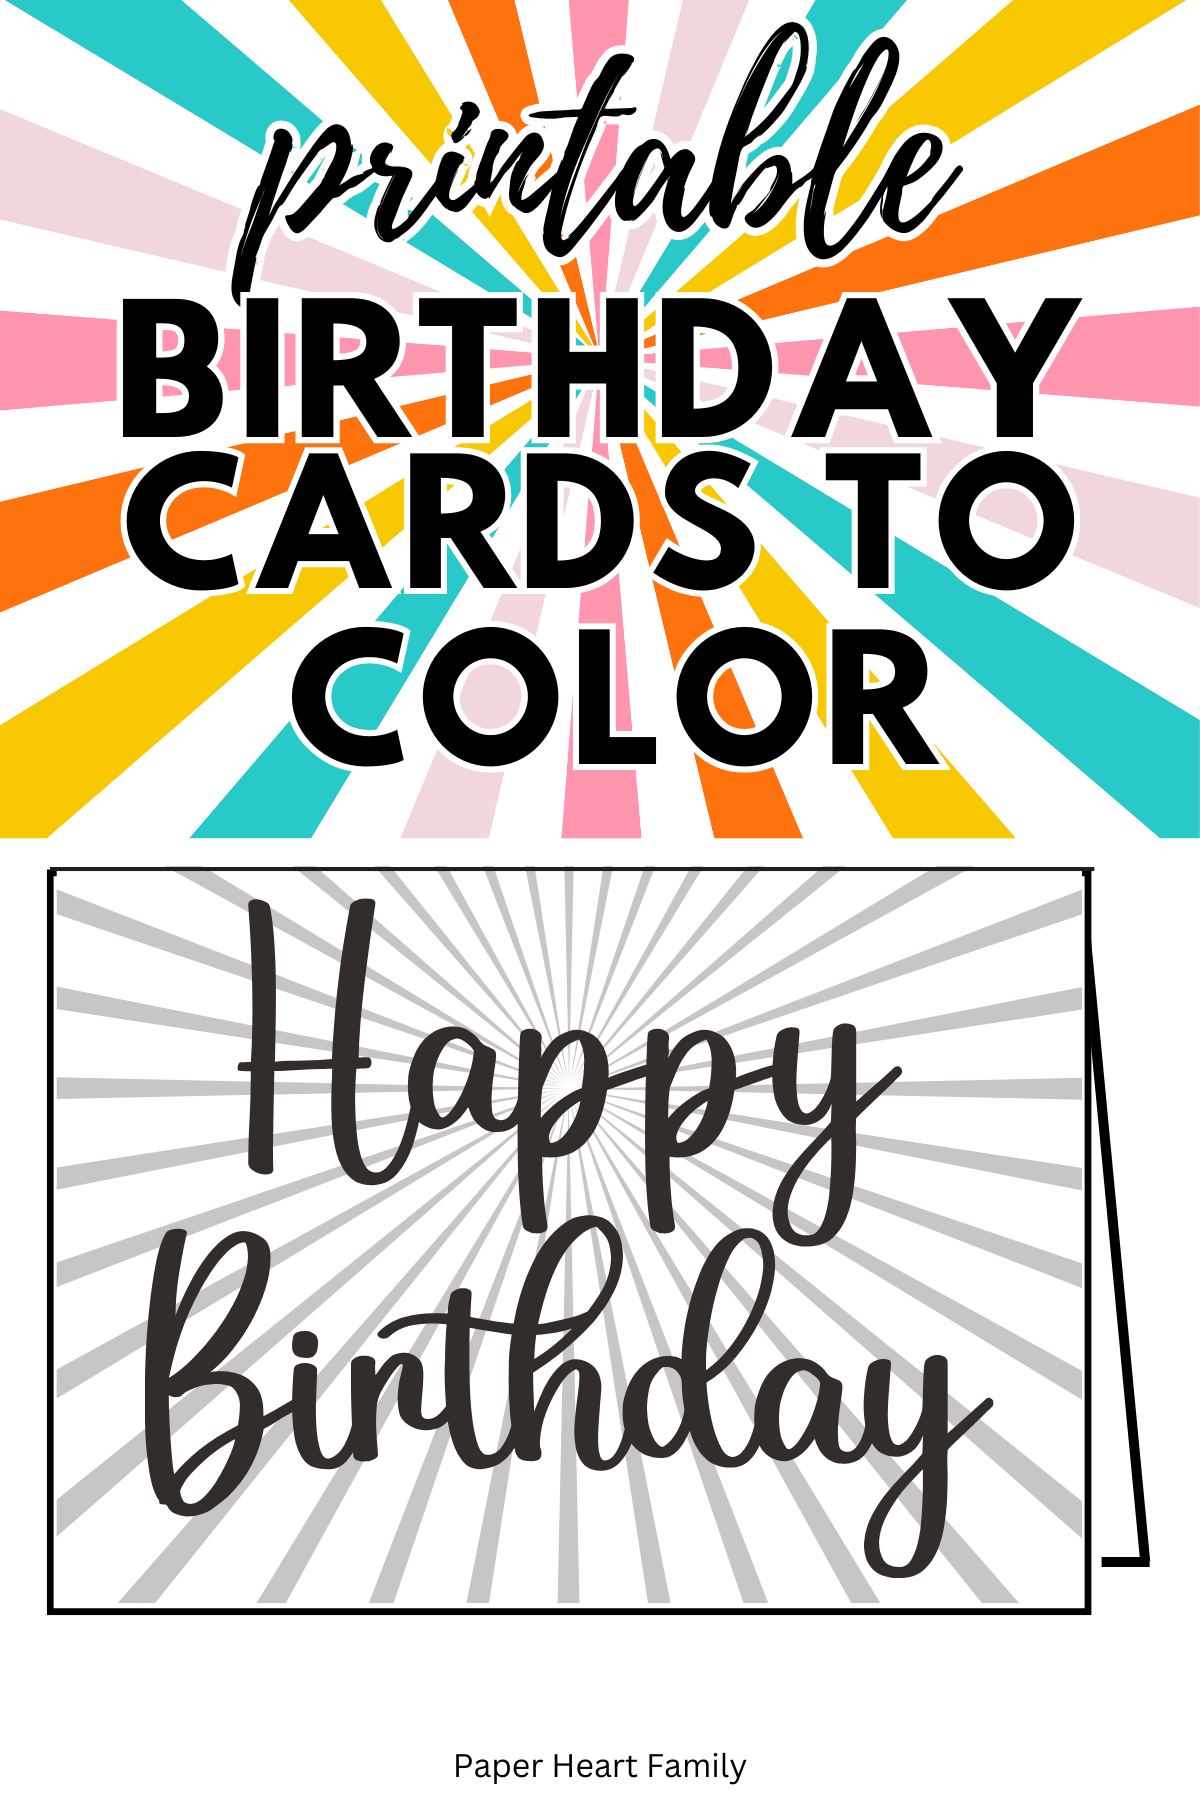 Birthday card with a sunburst